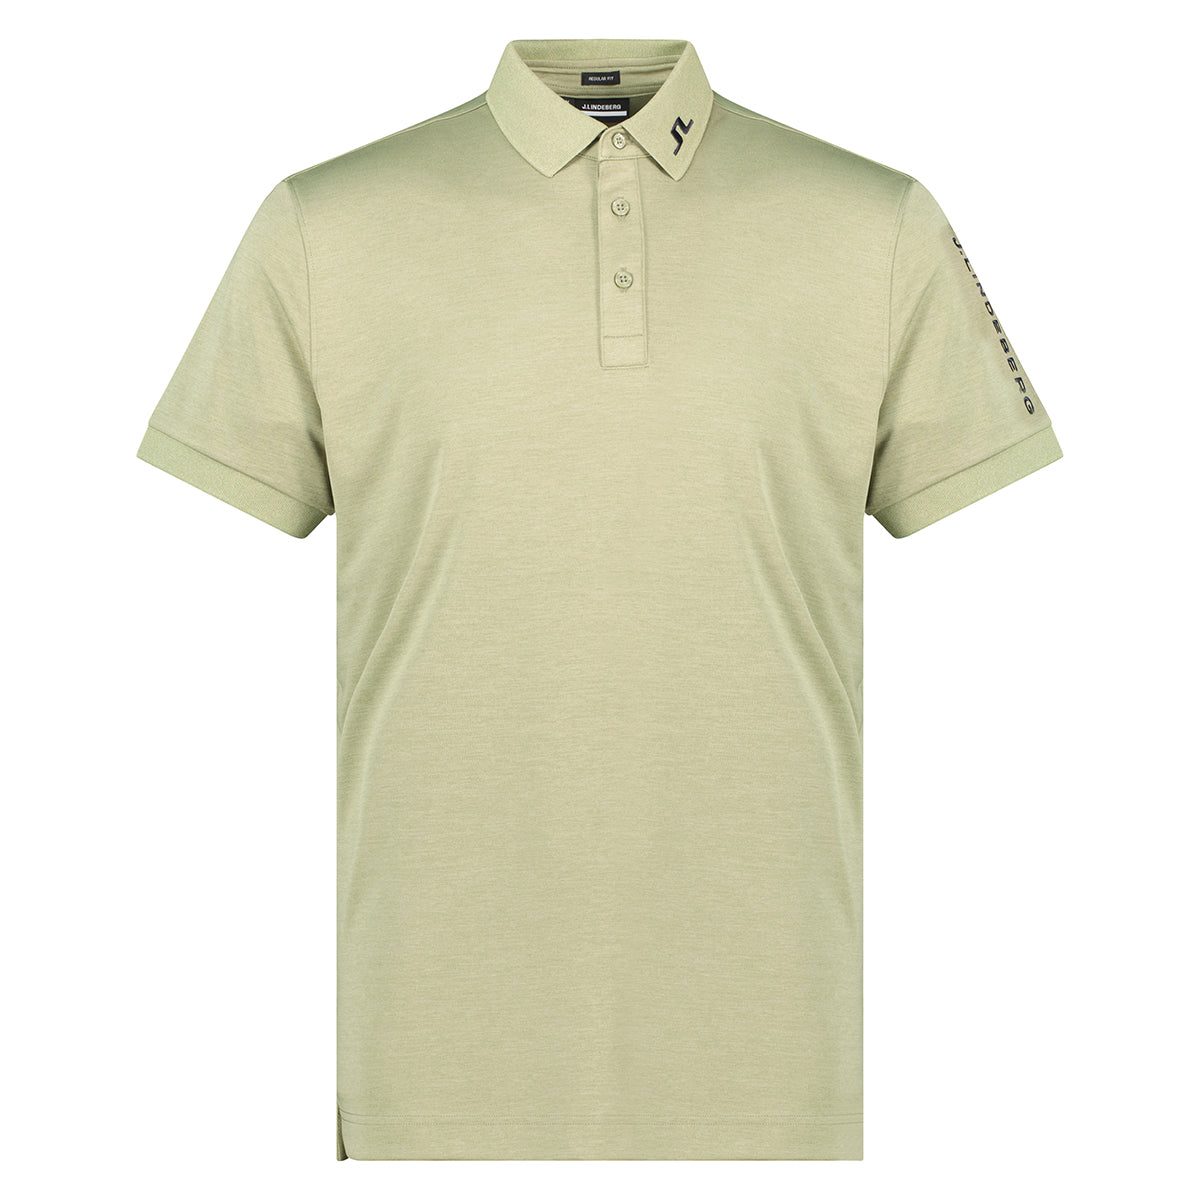 J Lindeberg Tour Tech Golf Polo Shirt GMJT09157